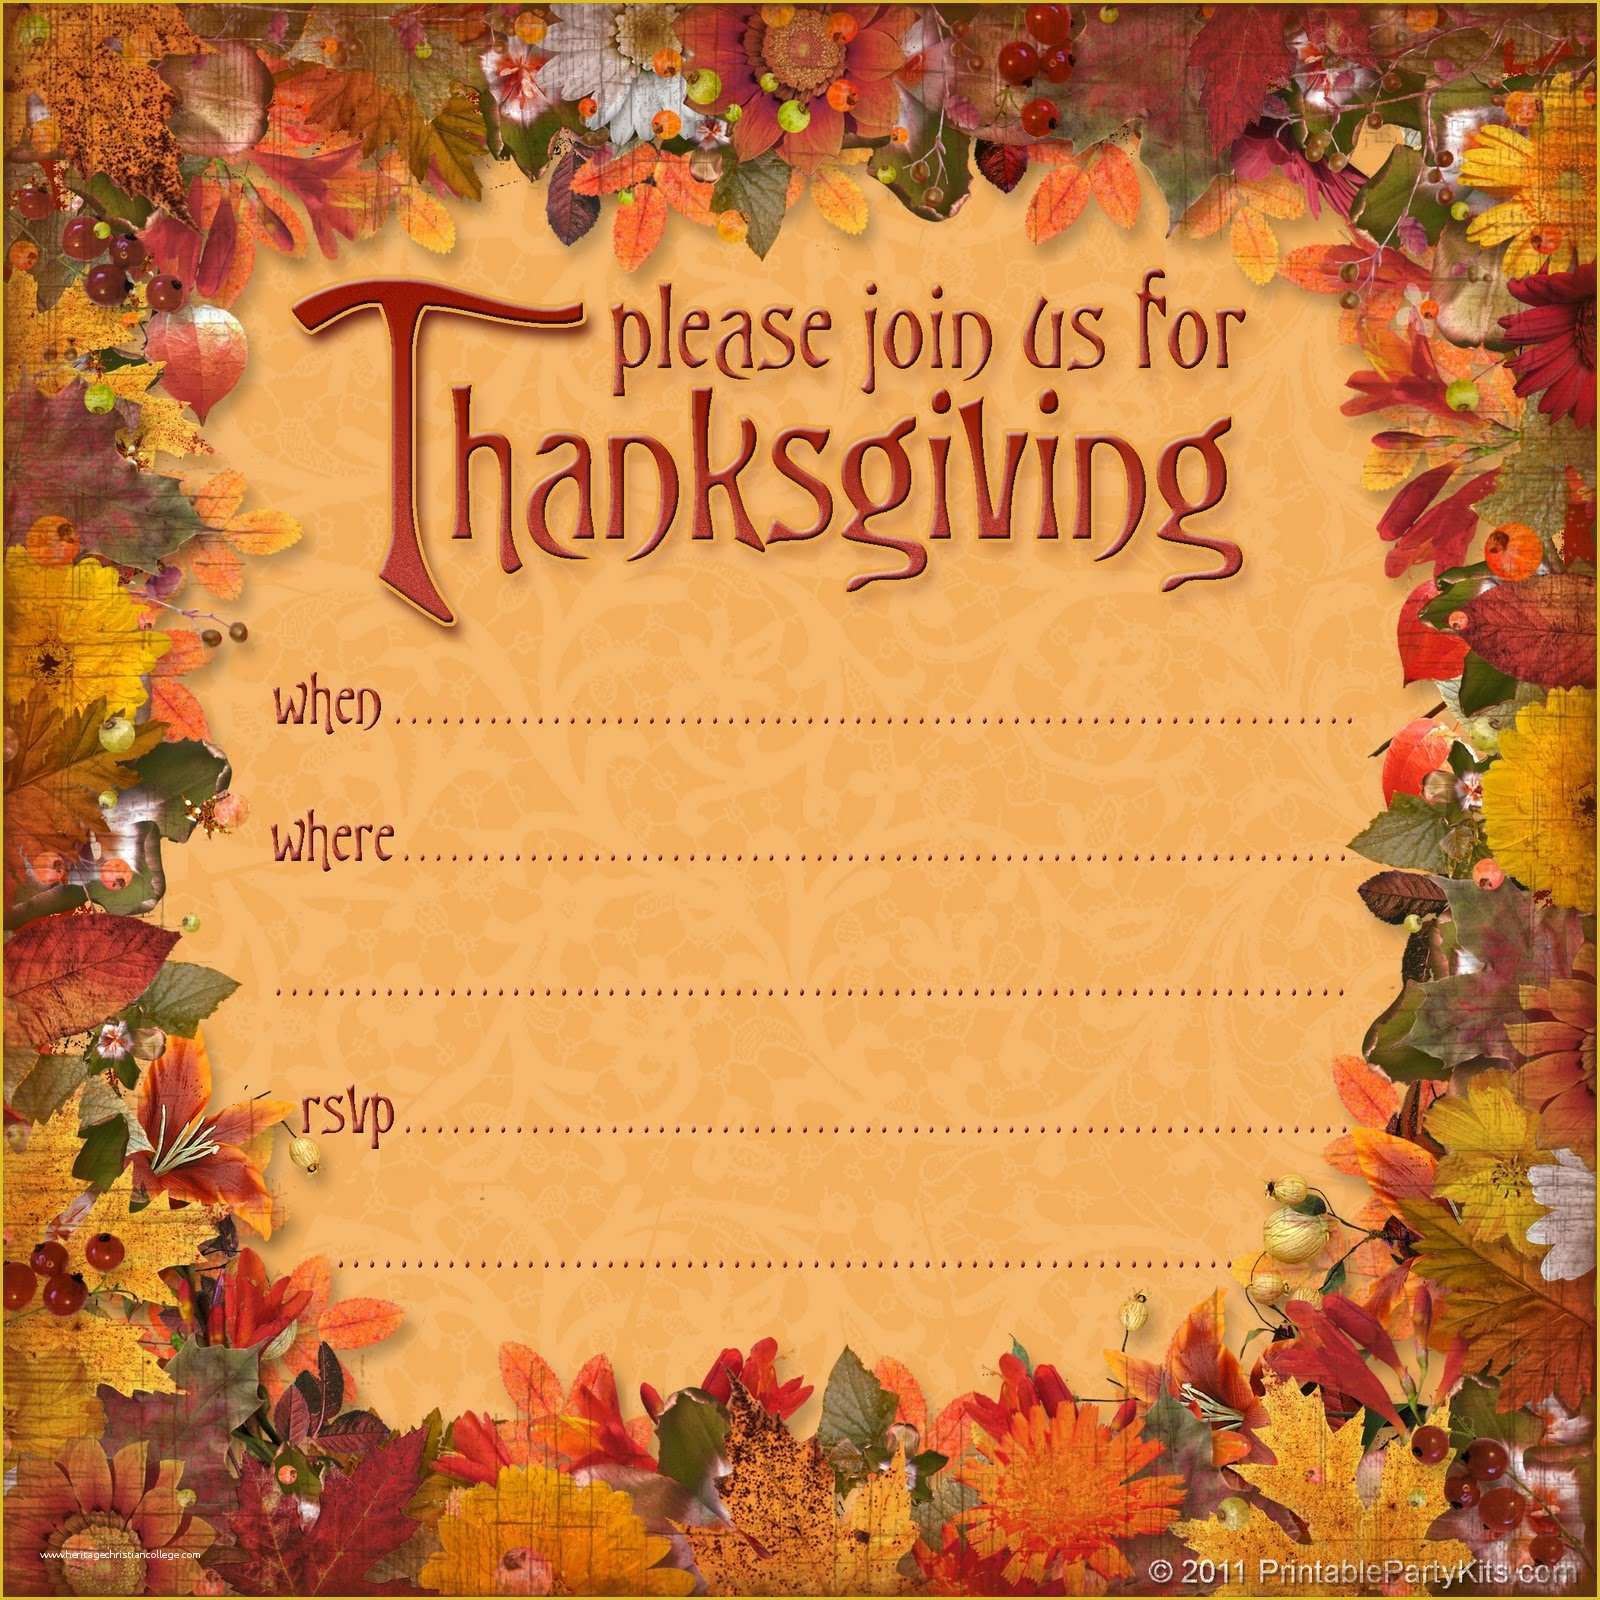 Free Thanksgiving Invitation Templates Of Free Printable Party Invitations Free Thanksgiving Dinner